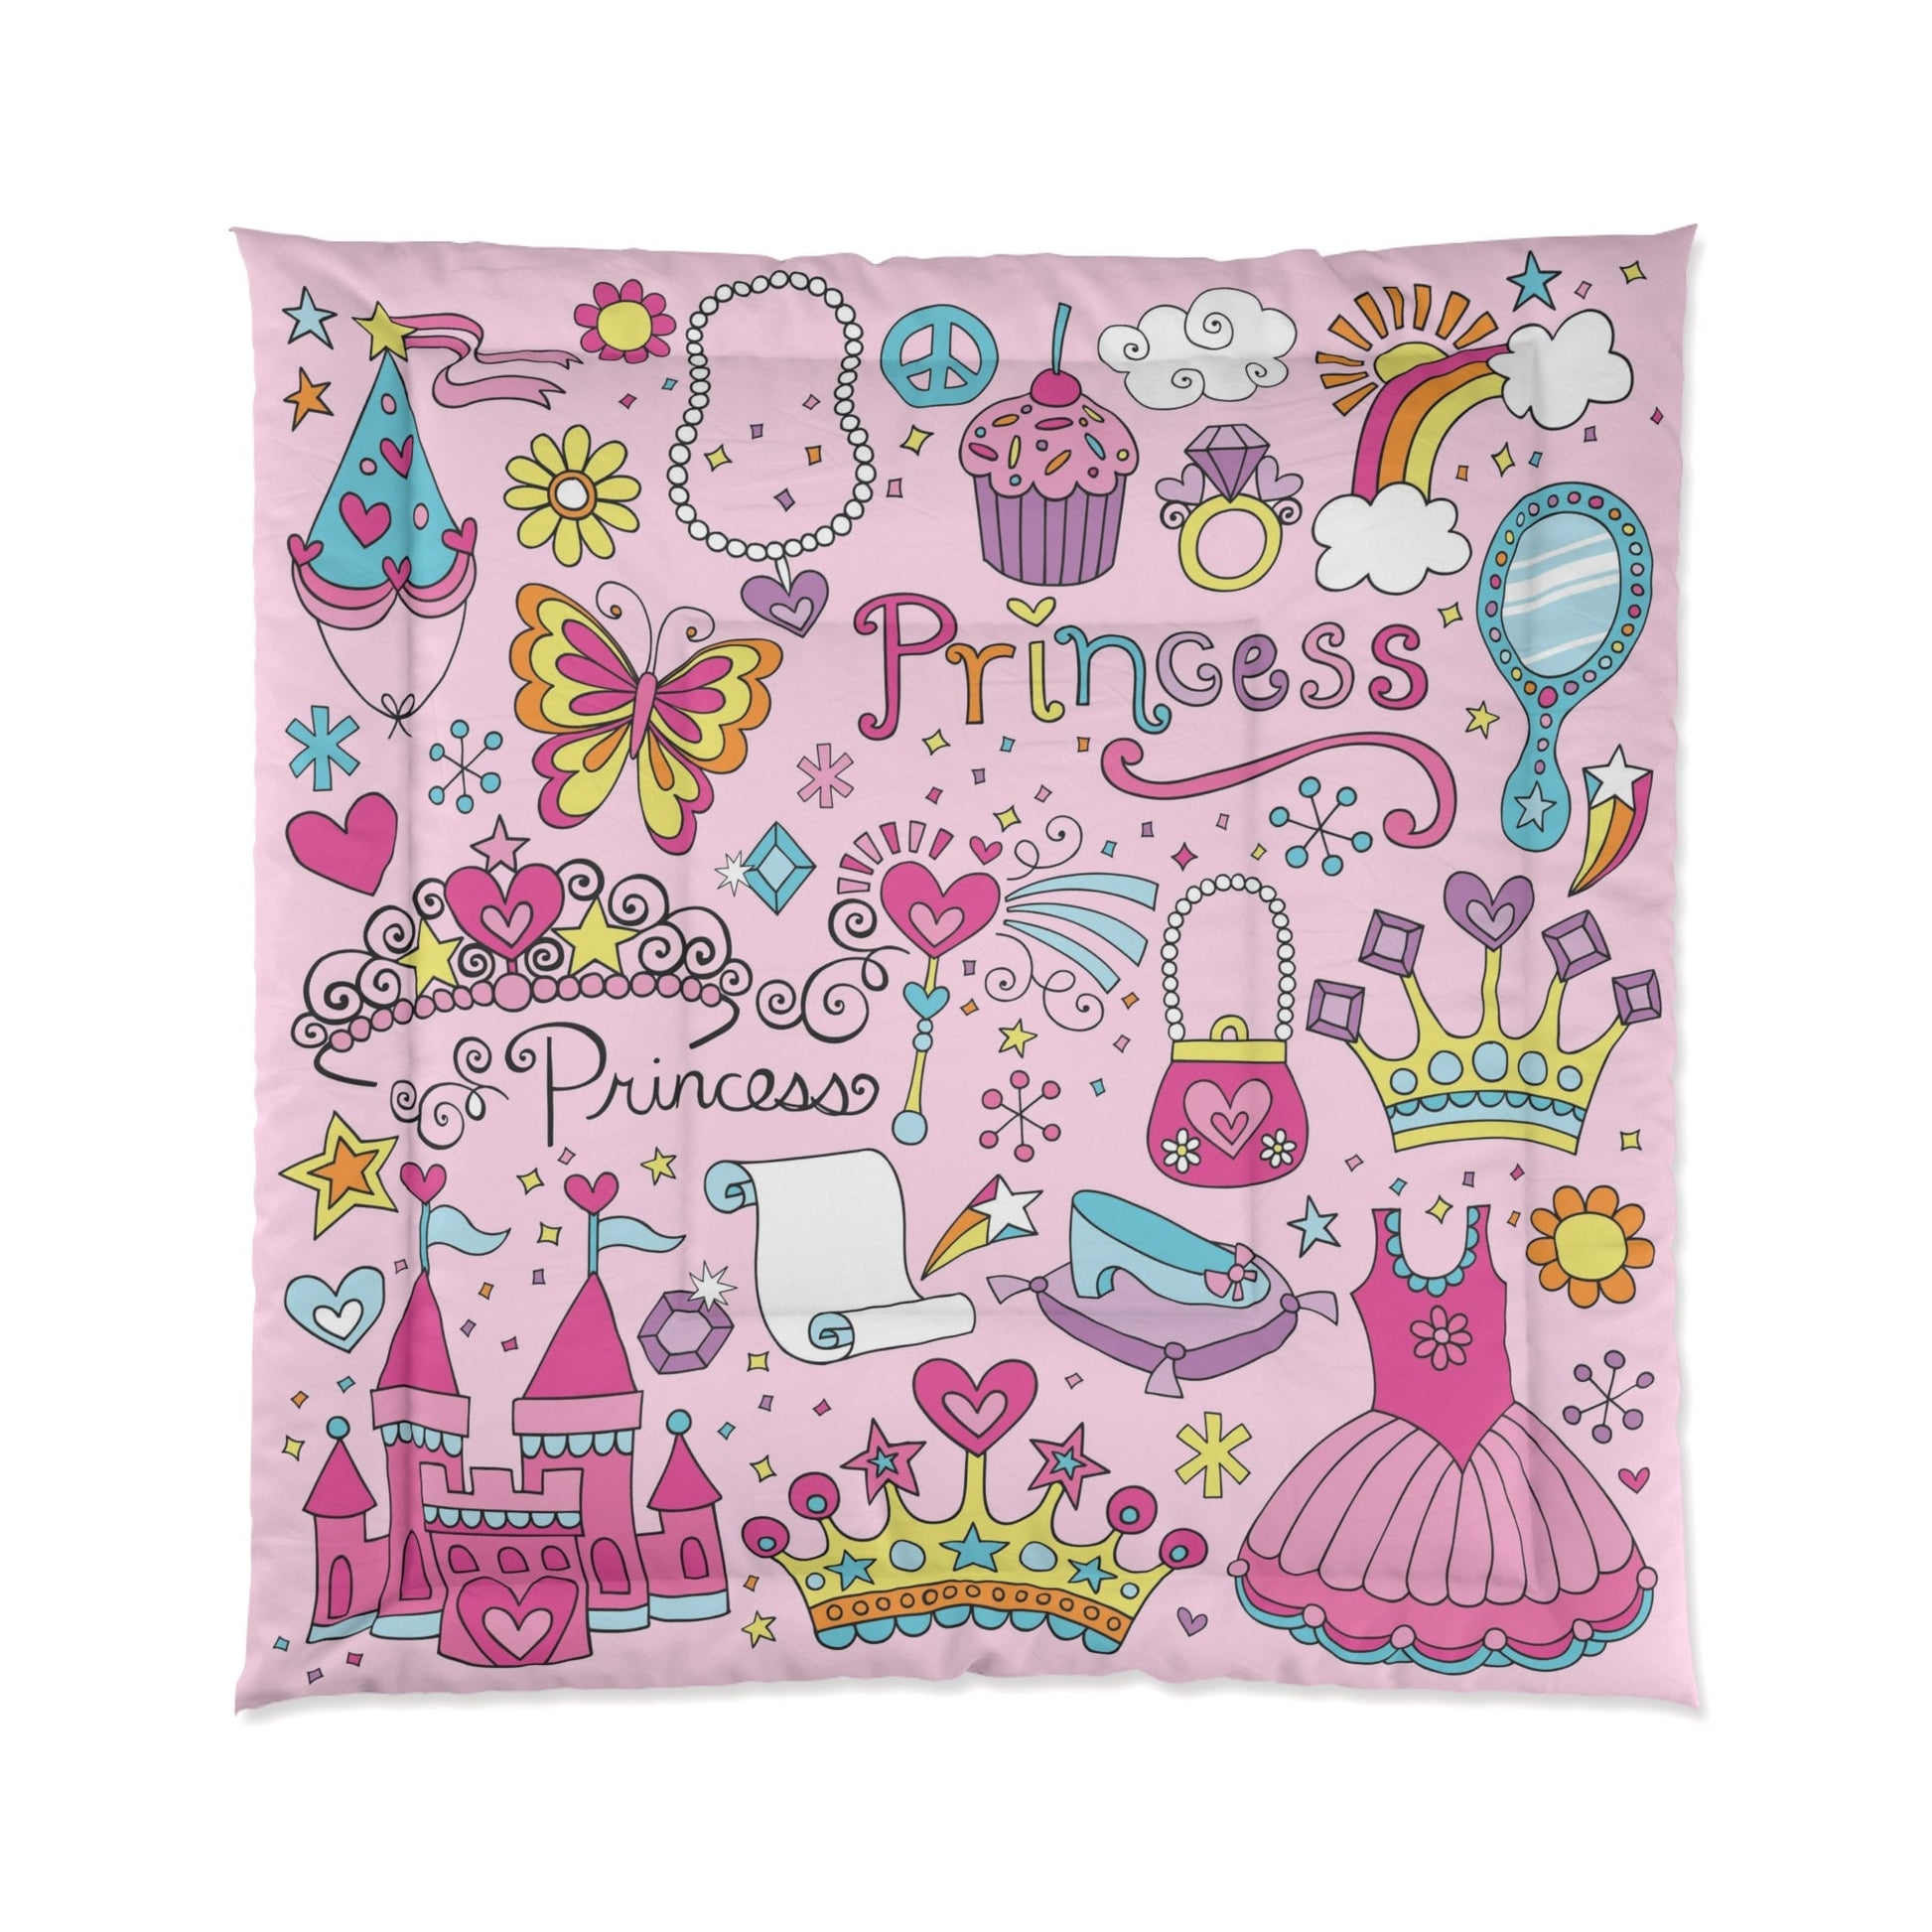 Princess Comforter or Duvet Cover Girls bedding girly duvet pink comforter rainbow comforter princess duvet princess bedding pink duvet